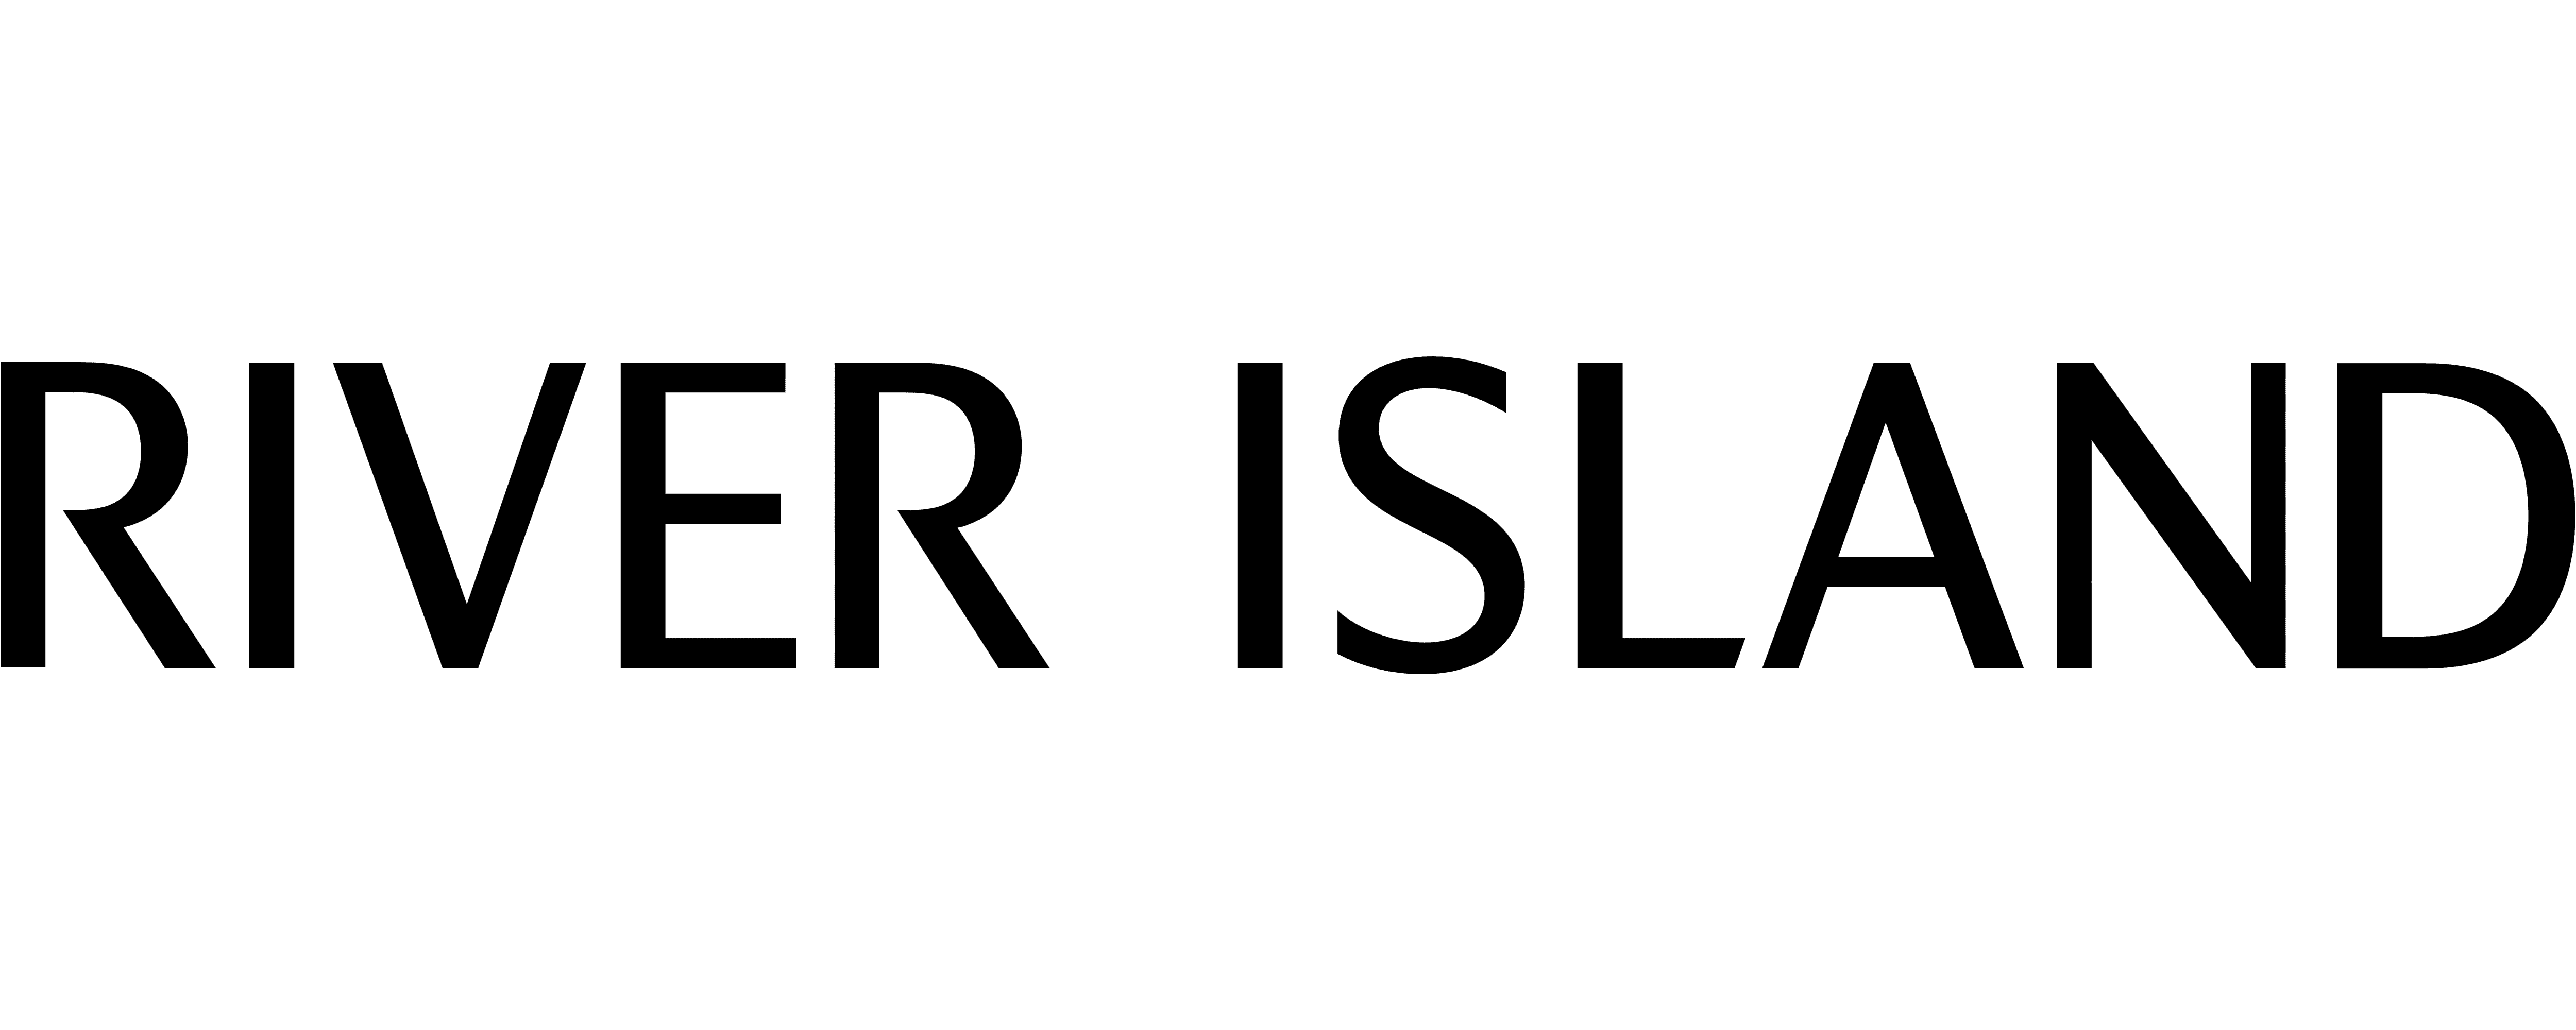 River Island Student Discounts logo